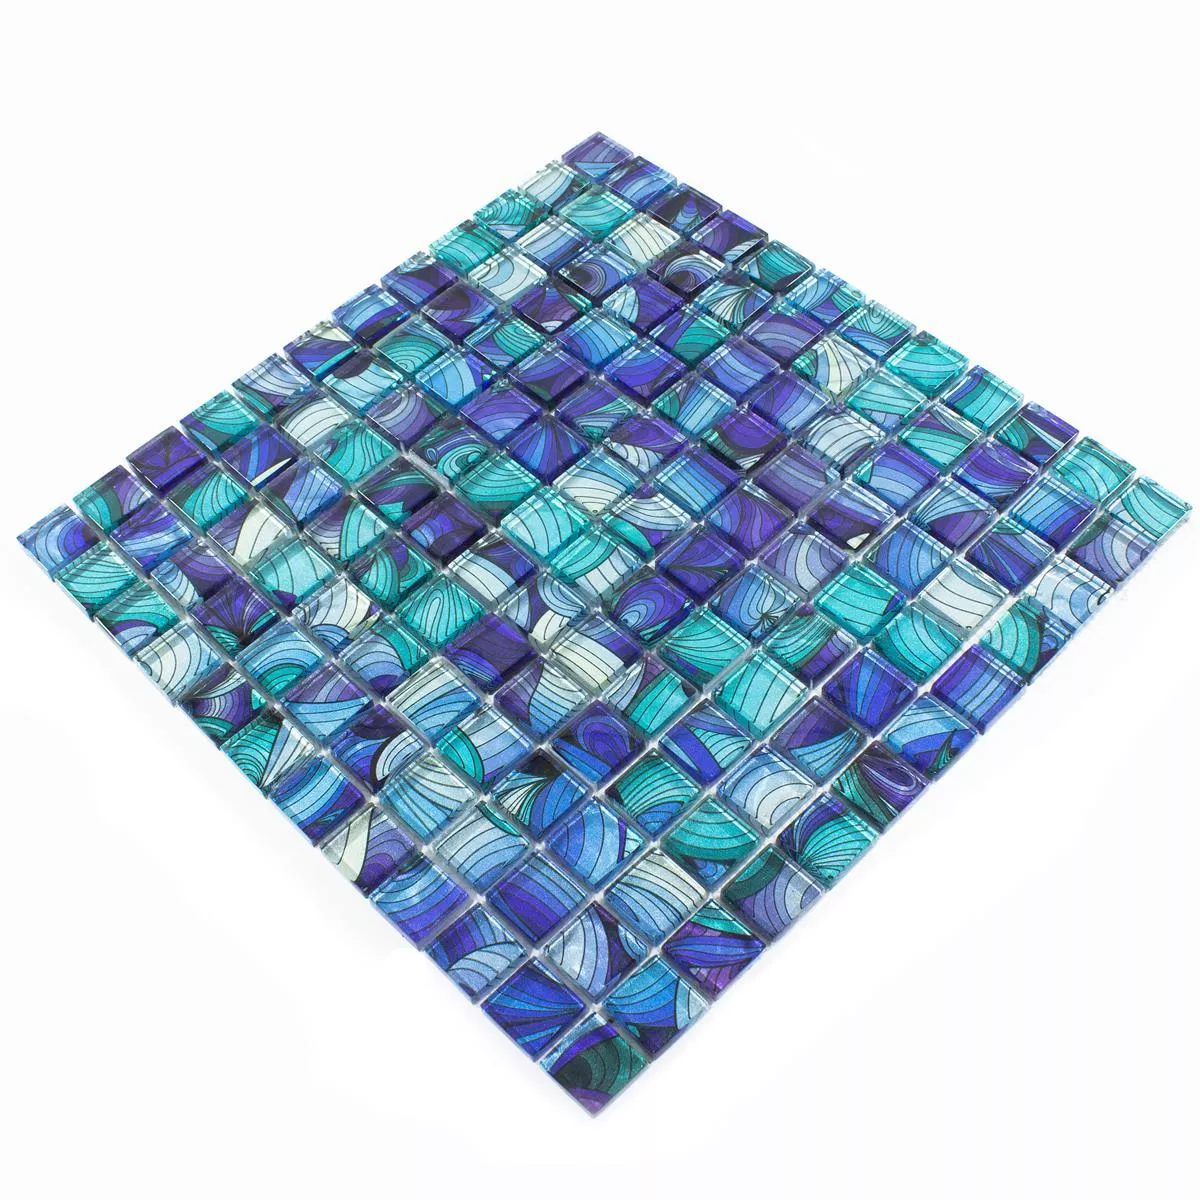 Sample Glass Mosaic Tiles Atlantis Blue Cyan